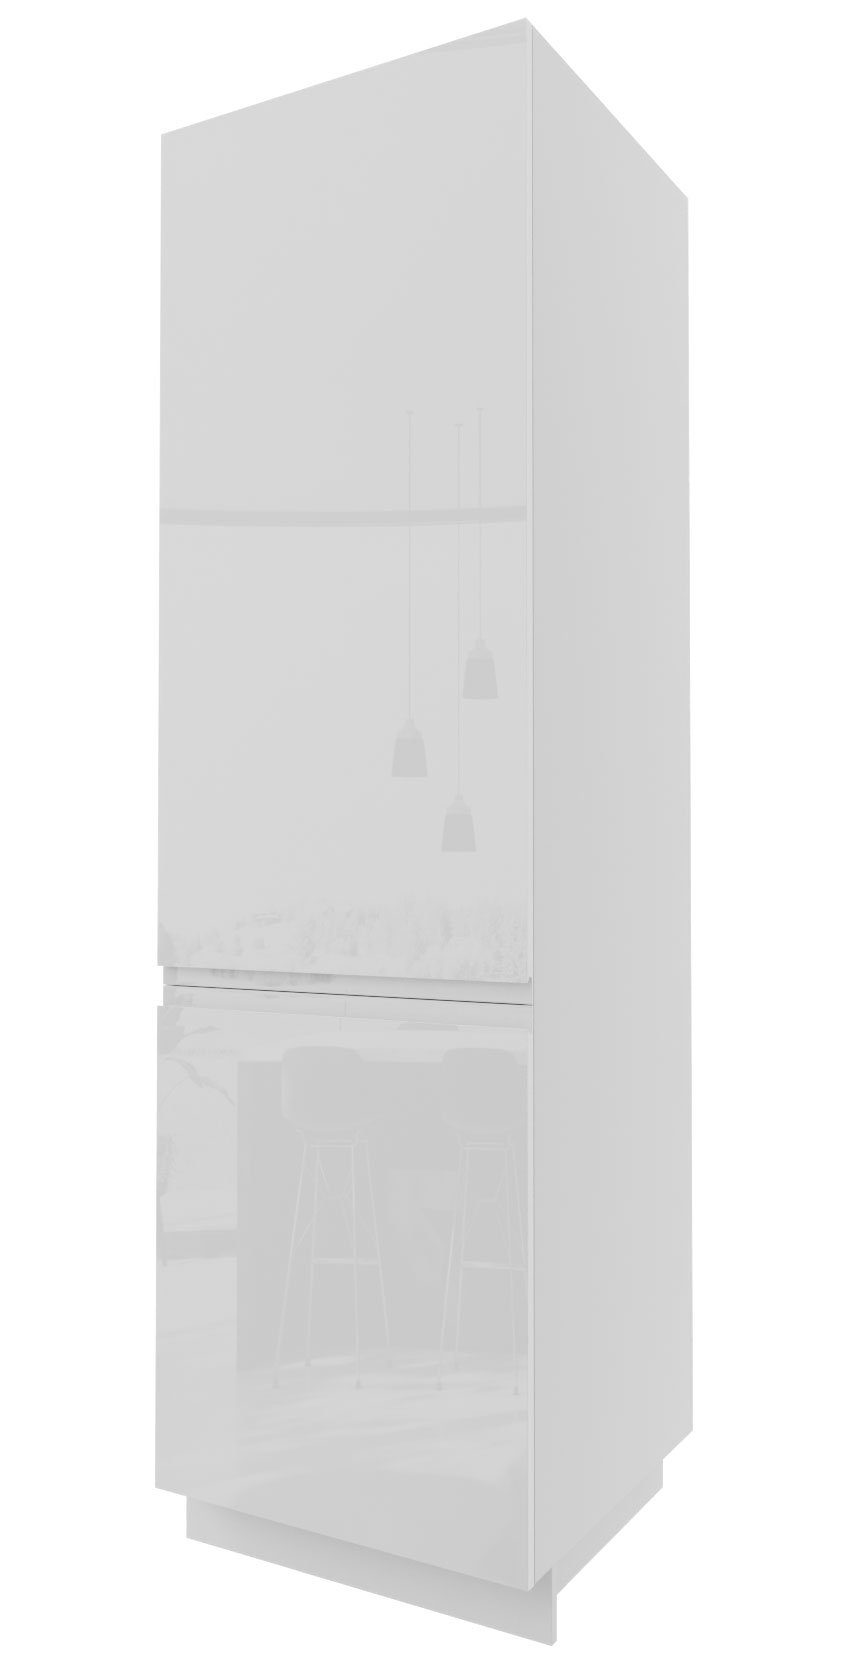 Feldmann-Wohnen Kühlumbauschrank Florence (Florence) 60cm Front-, Korpusfarbe und Ausführung wählbar grifflos 2-türig RAL 6021 blassgrün Hochglanz